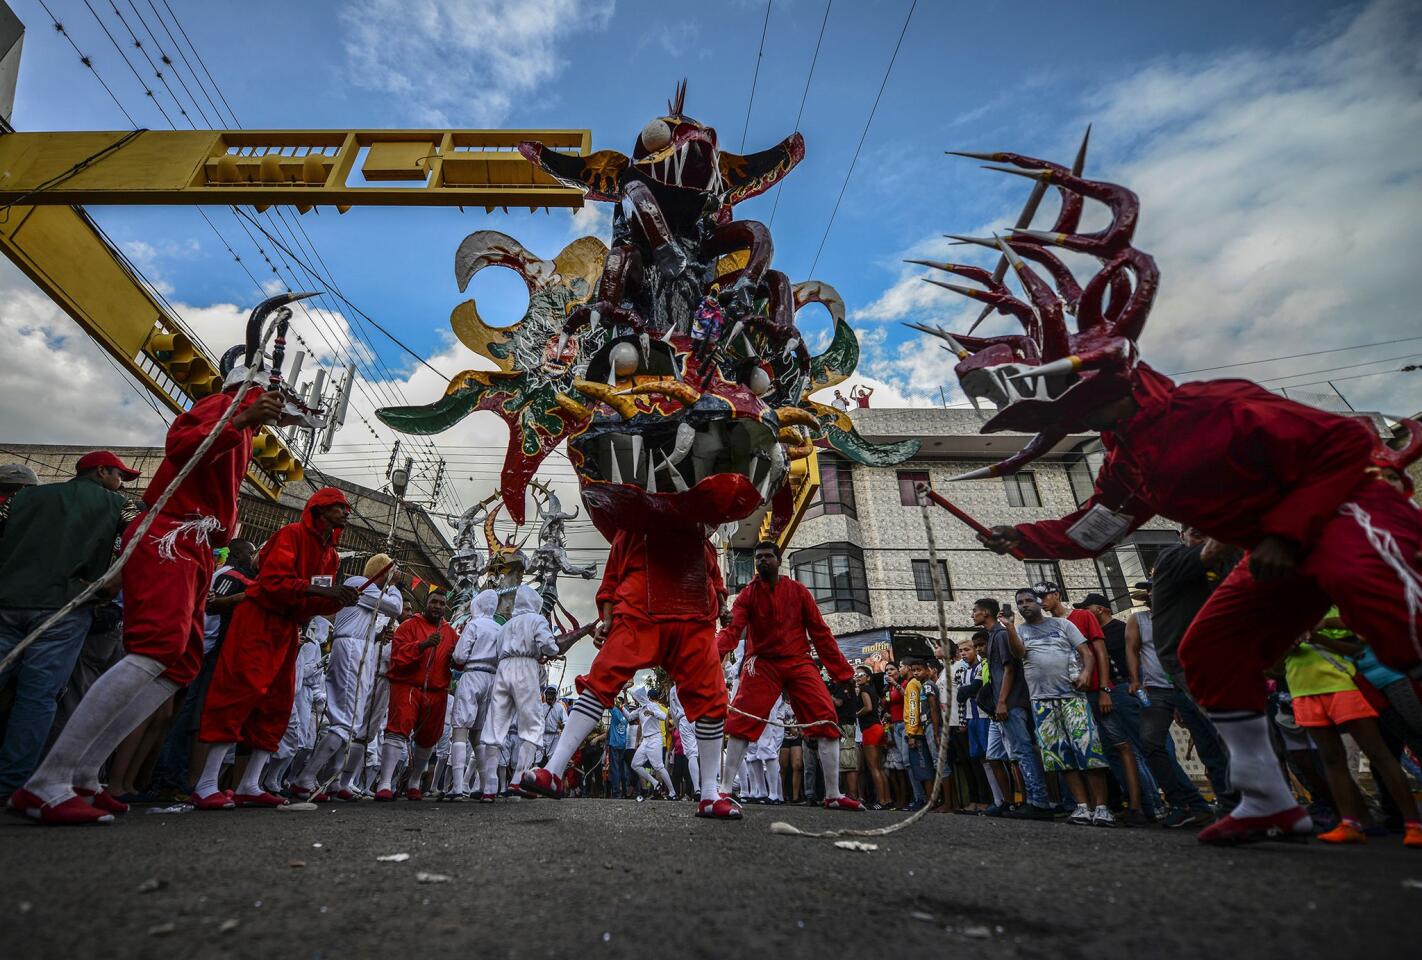 Carnival around the world 2017